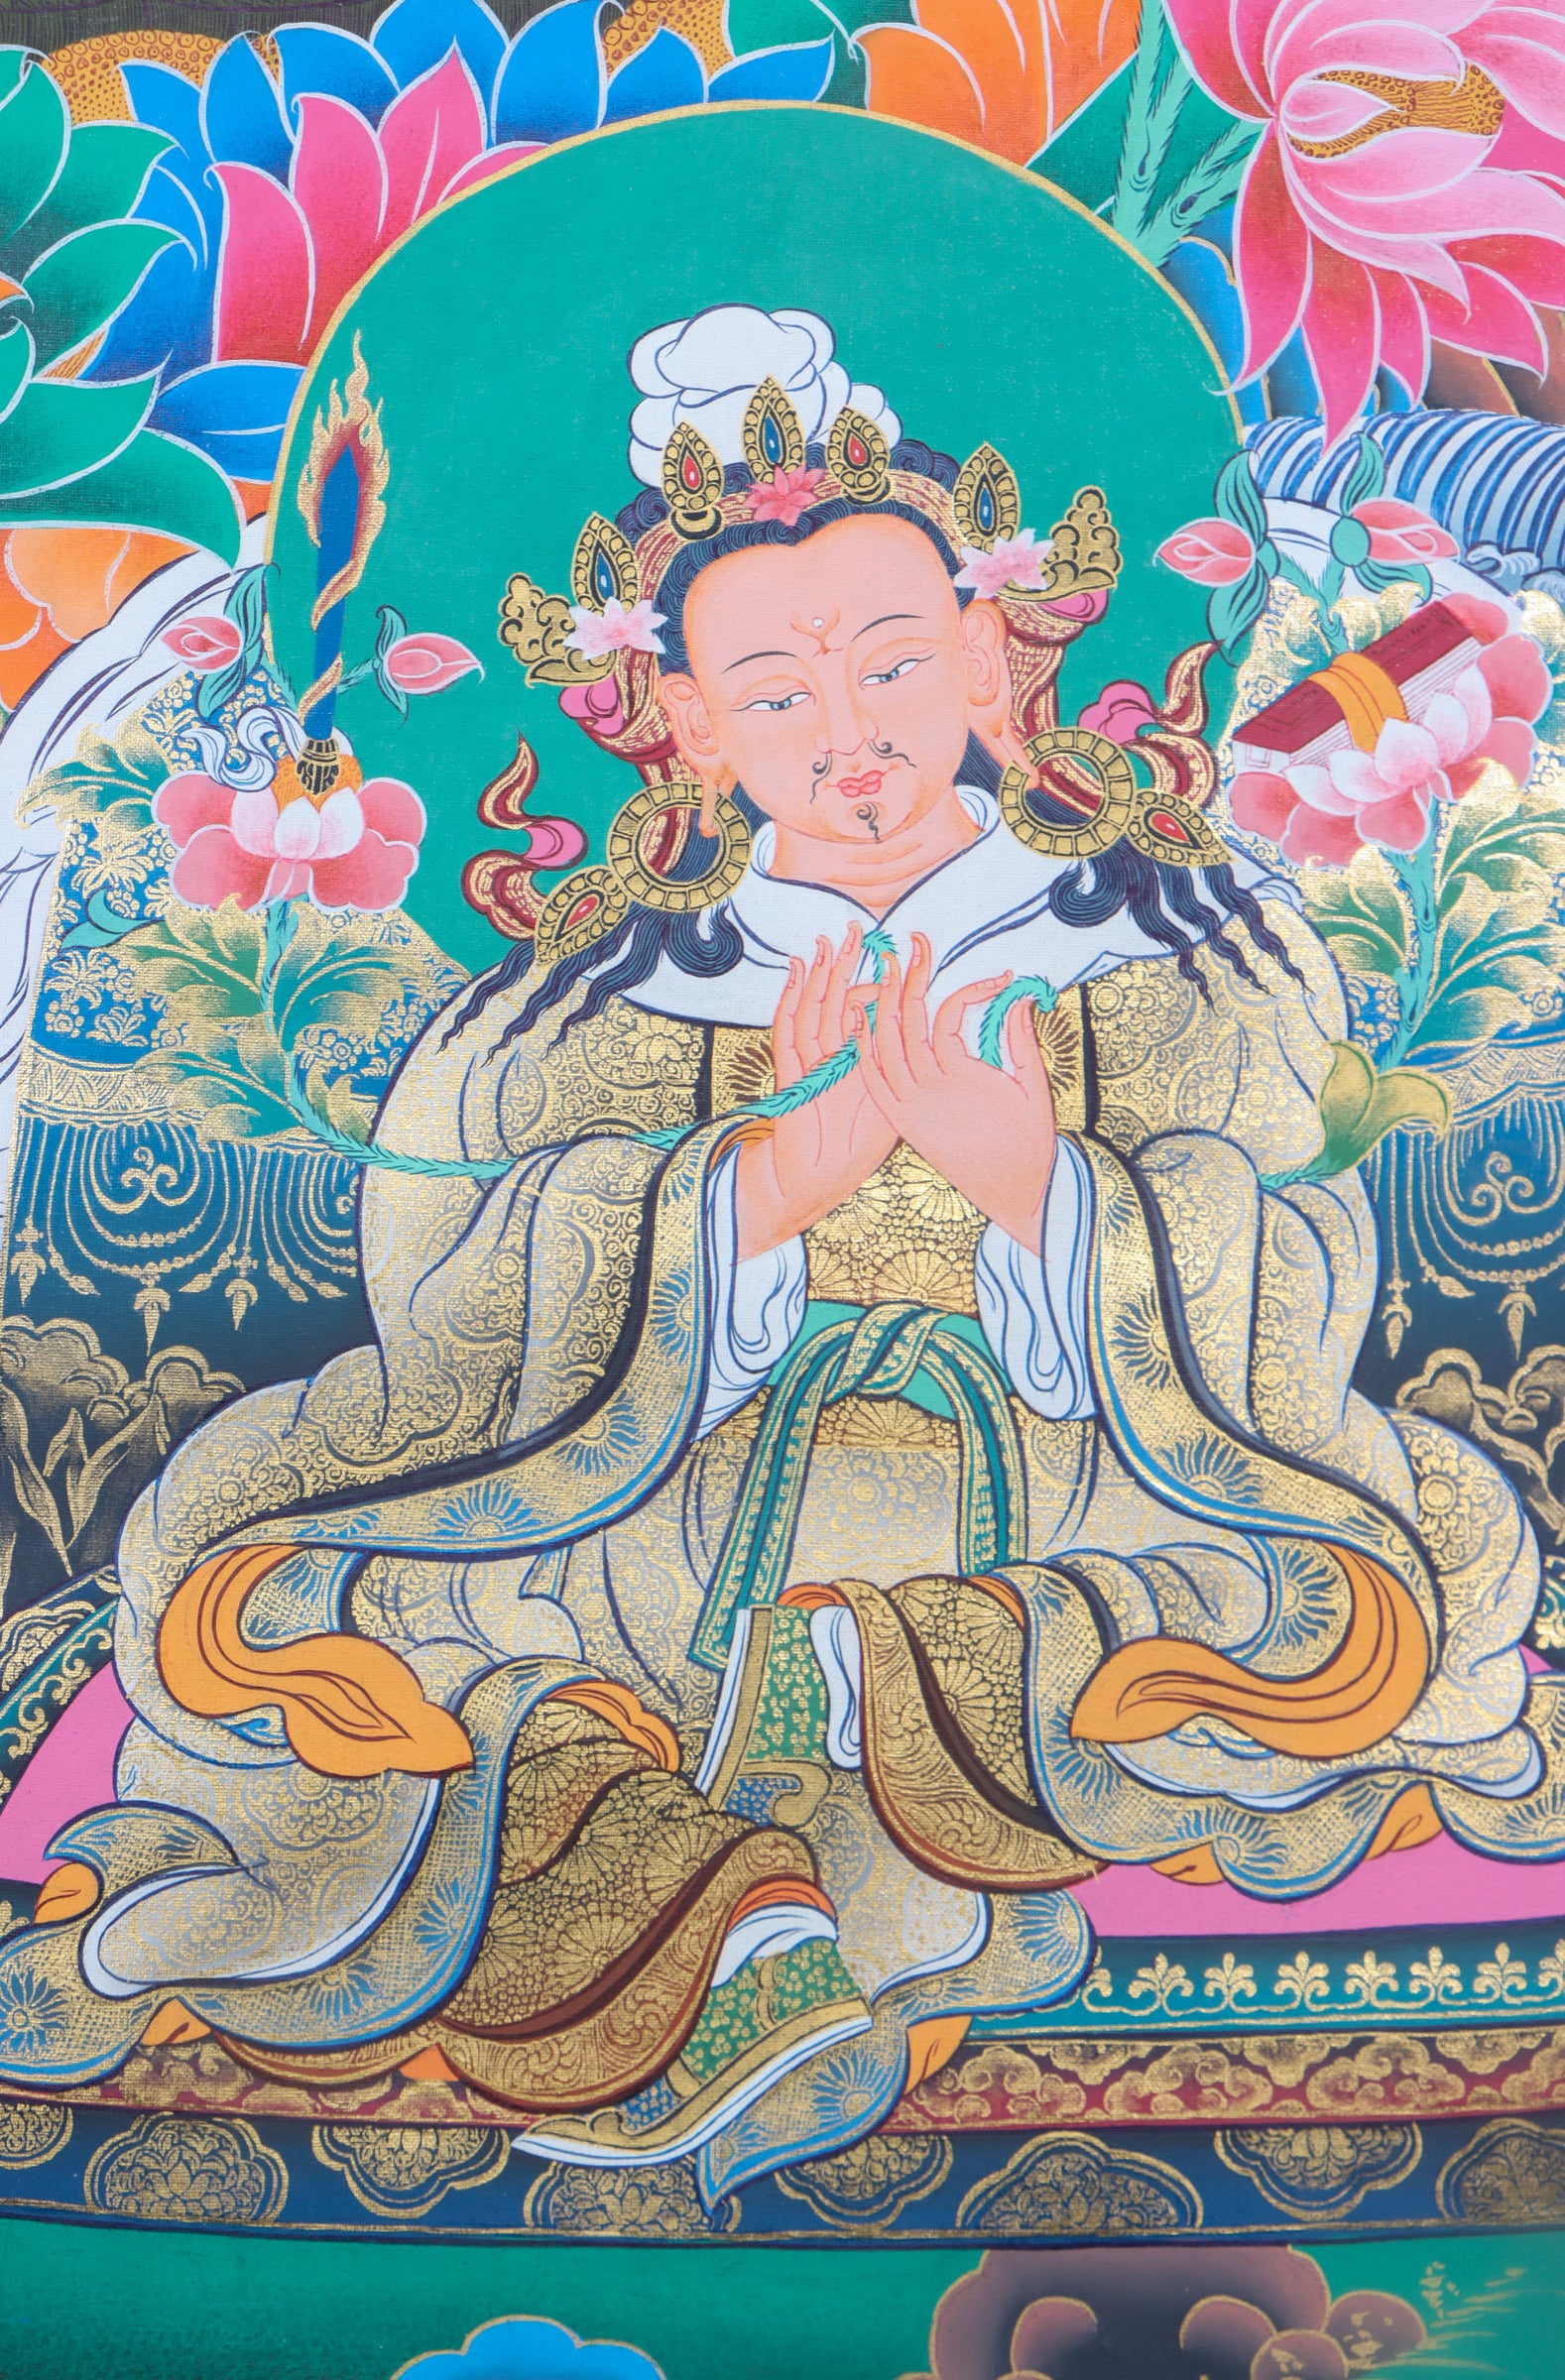 Guru Rinpoche Thangka Painting for enlightment.